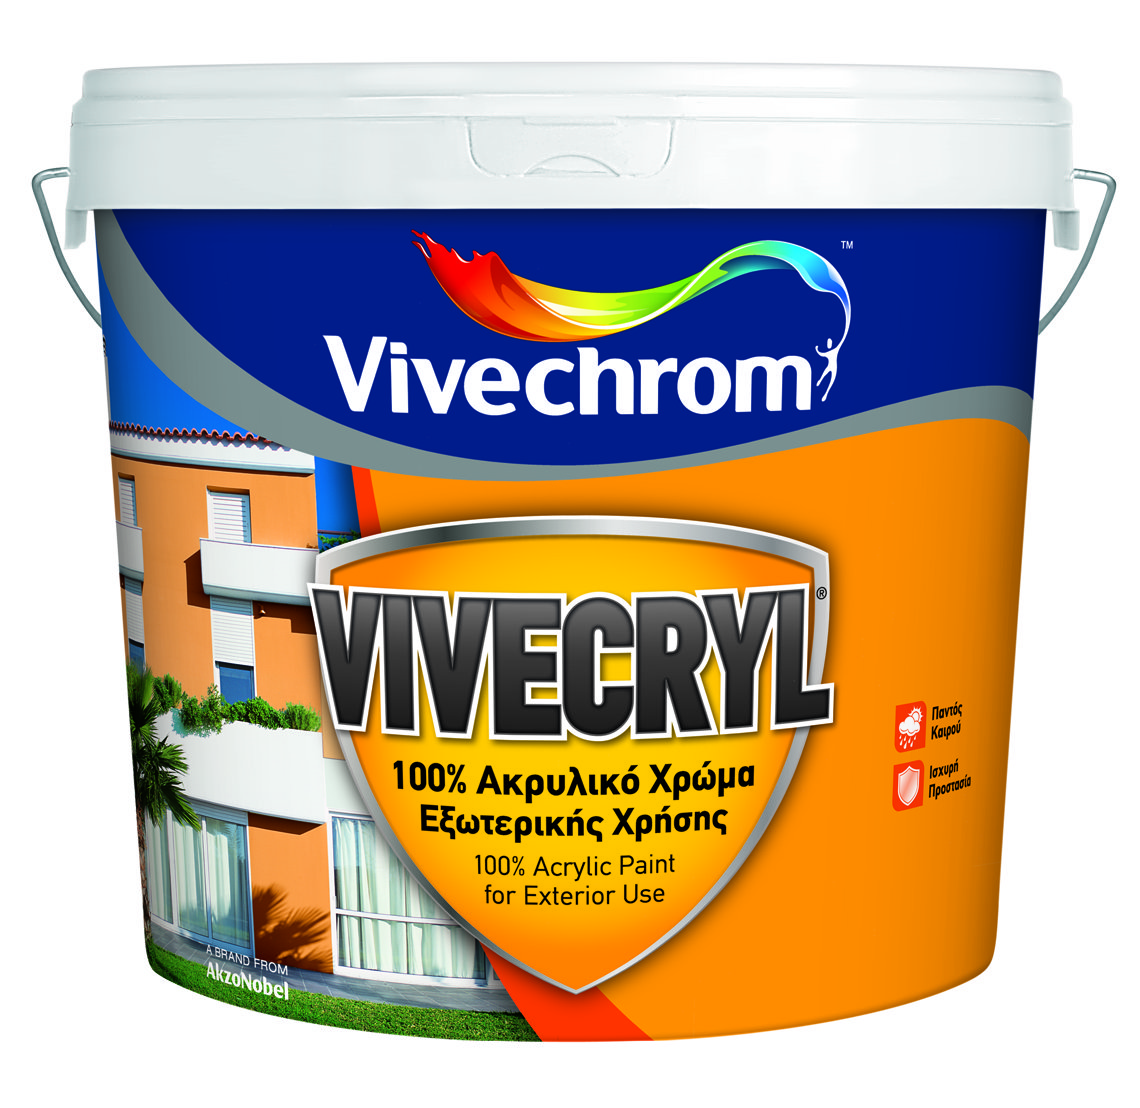 Vivechrom Vivecryl Ακρυλικό Οικολογικό Χρώμα Matt Finish Λευκό 3L